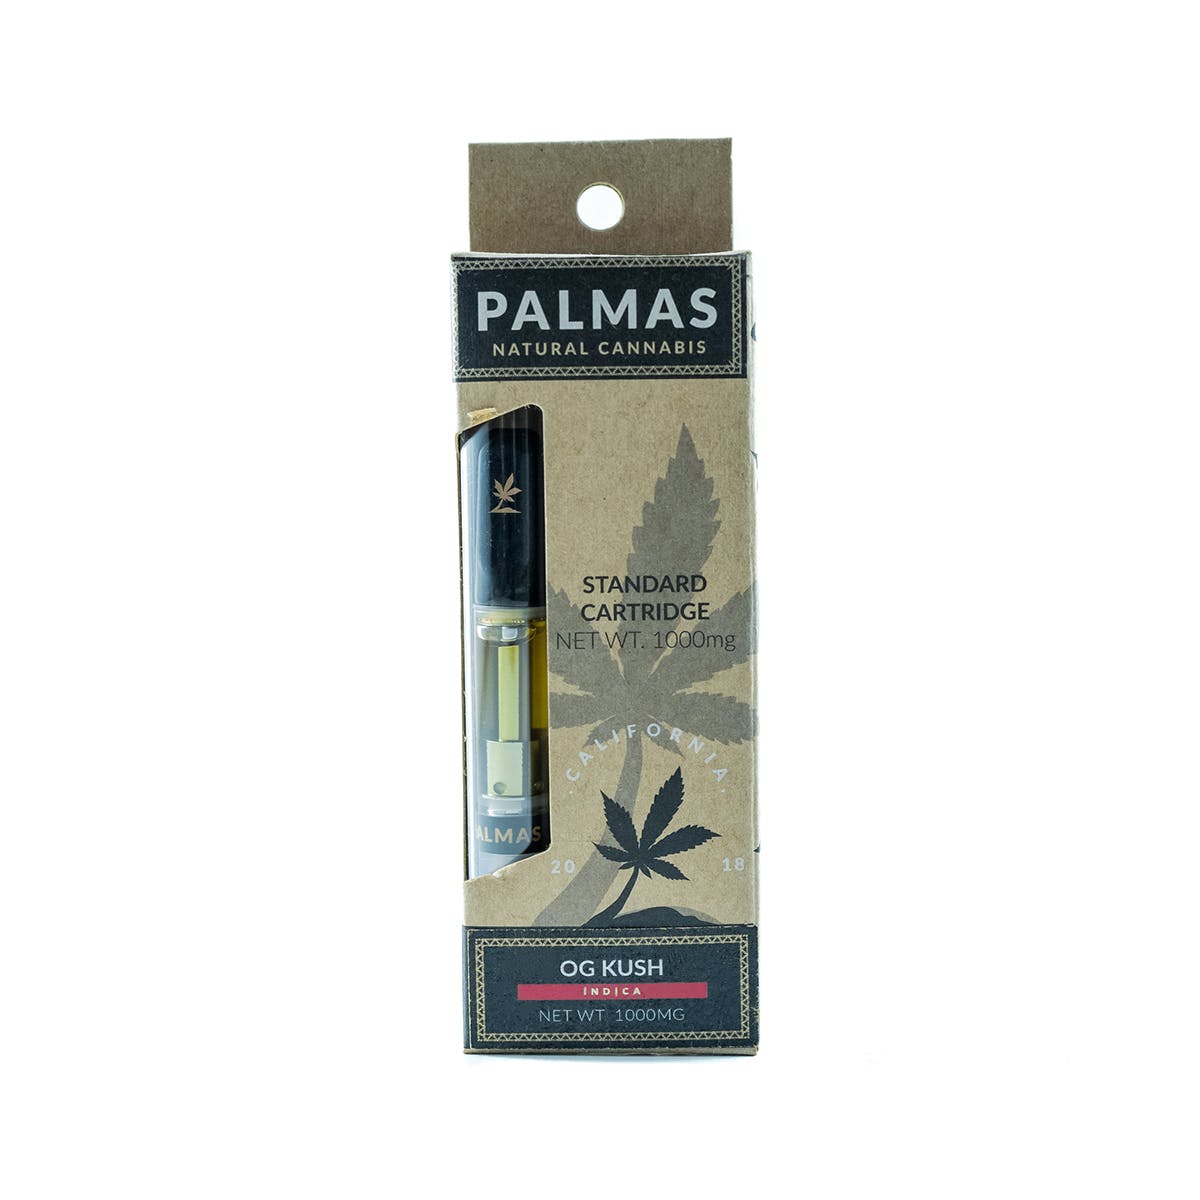 marijuana-dispensaries-gold-20-cap-collective-in-los-angeles-palmas-standard-cartridge-og-kush